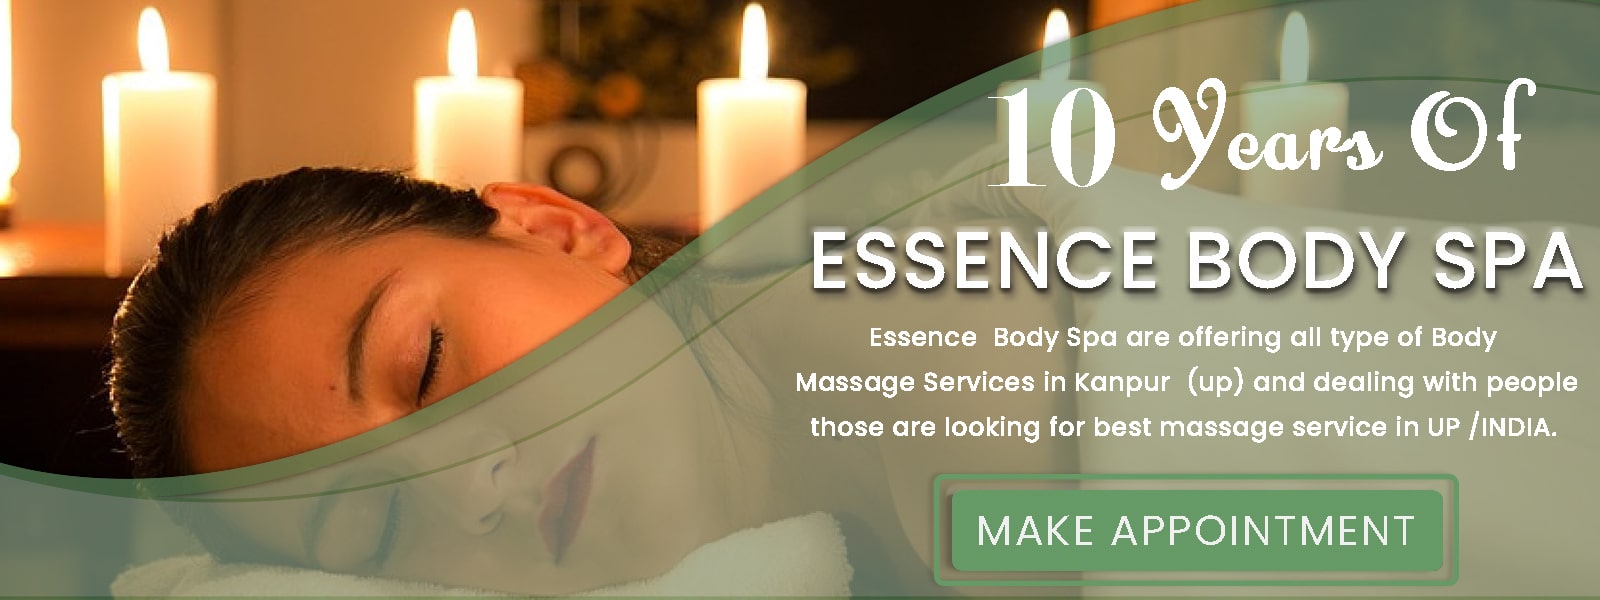 essence body spa | best body massage in kanpur